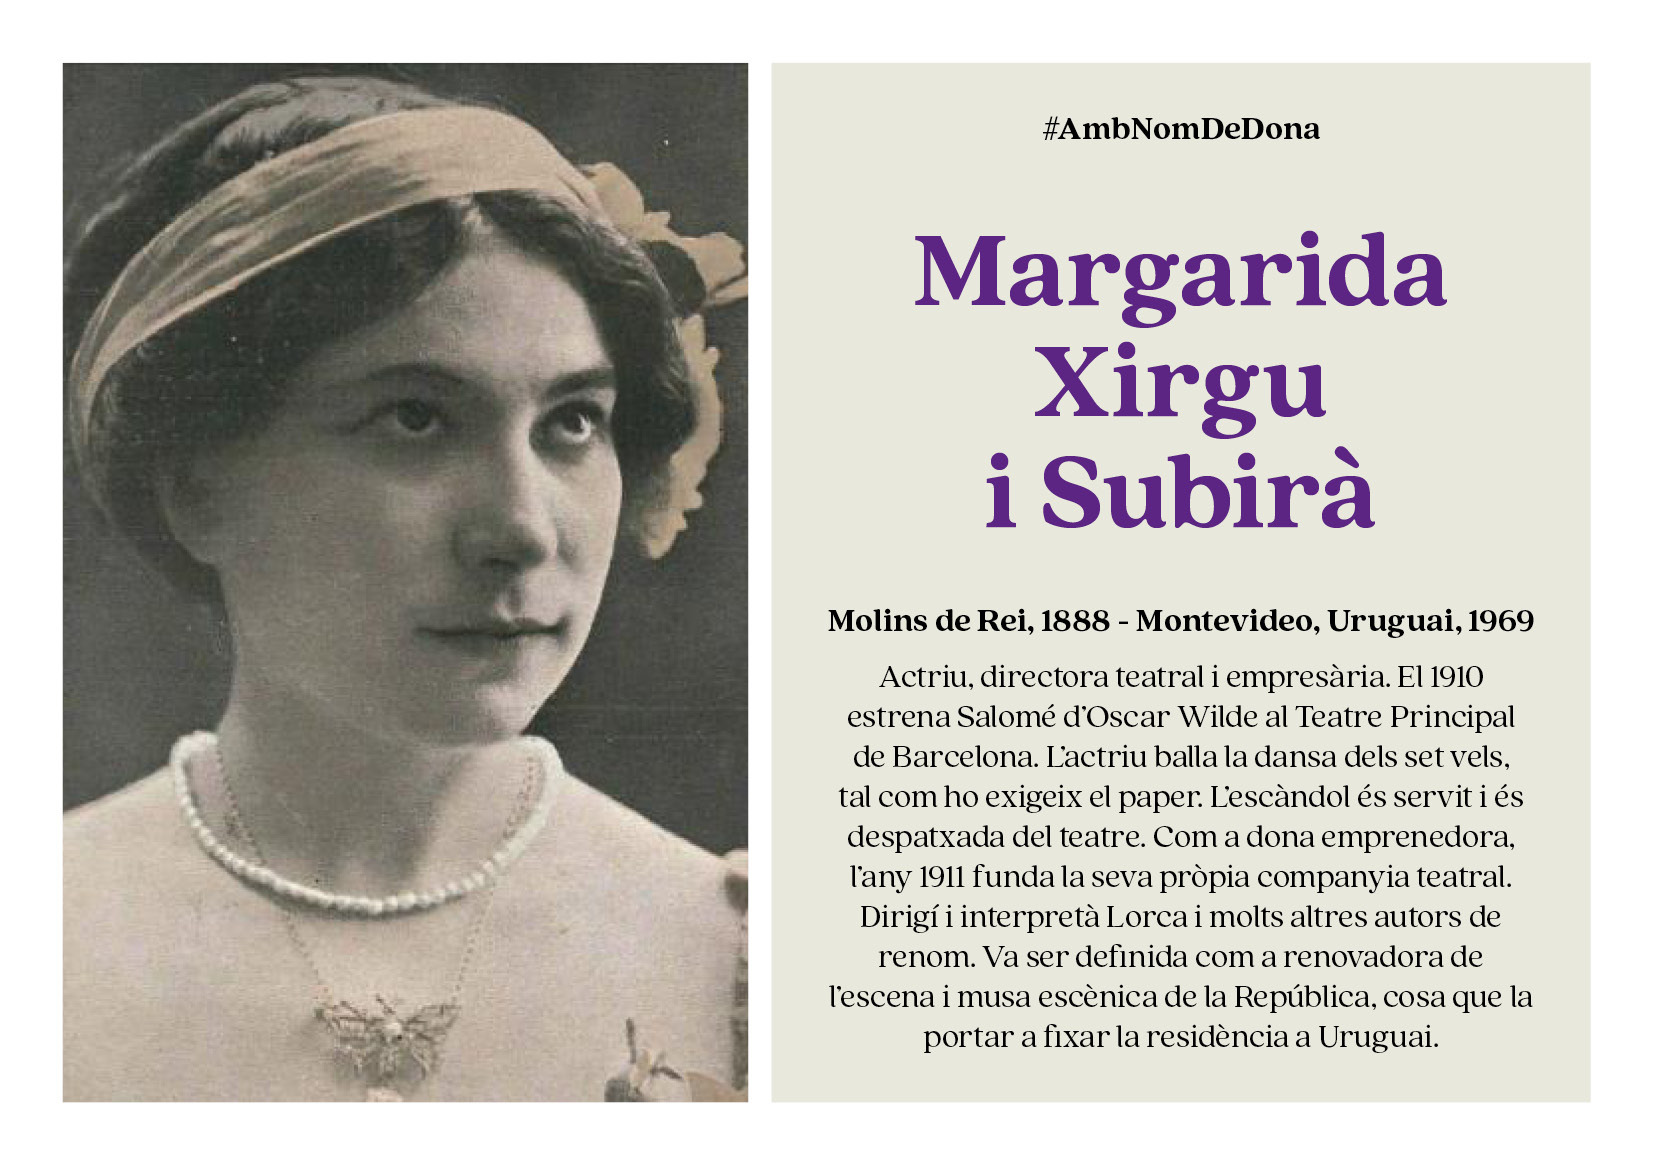 Margarida Xirgu i Subirà